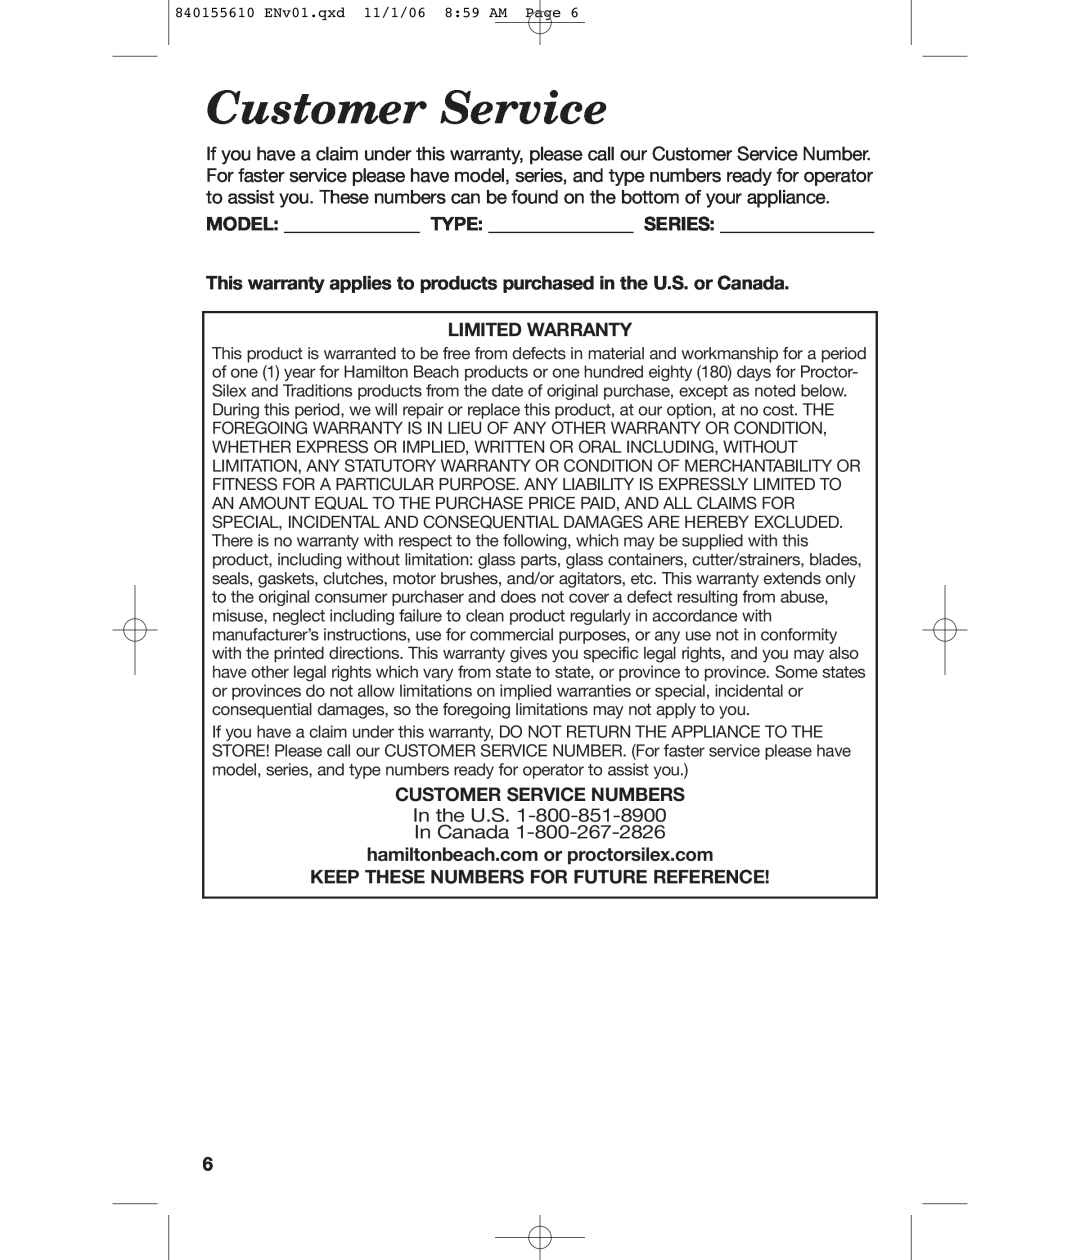 Hamilton Beach 840155610 manual Model Type Series, Limited Warranty, Customer Service Numbers 